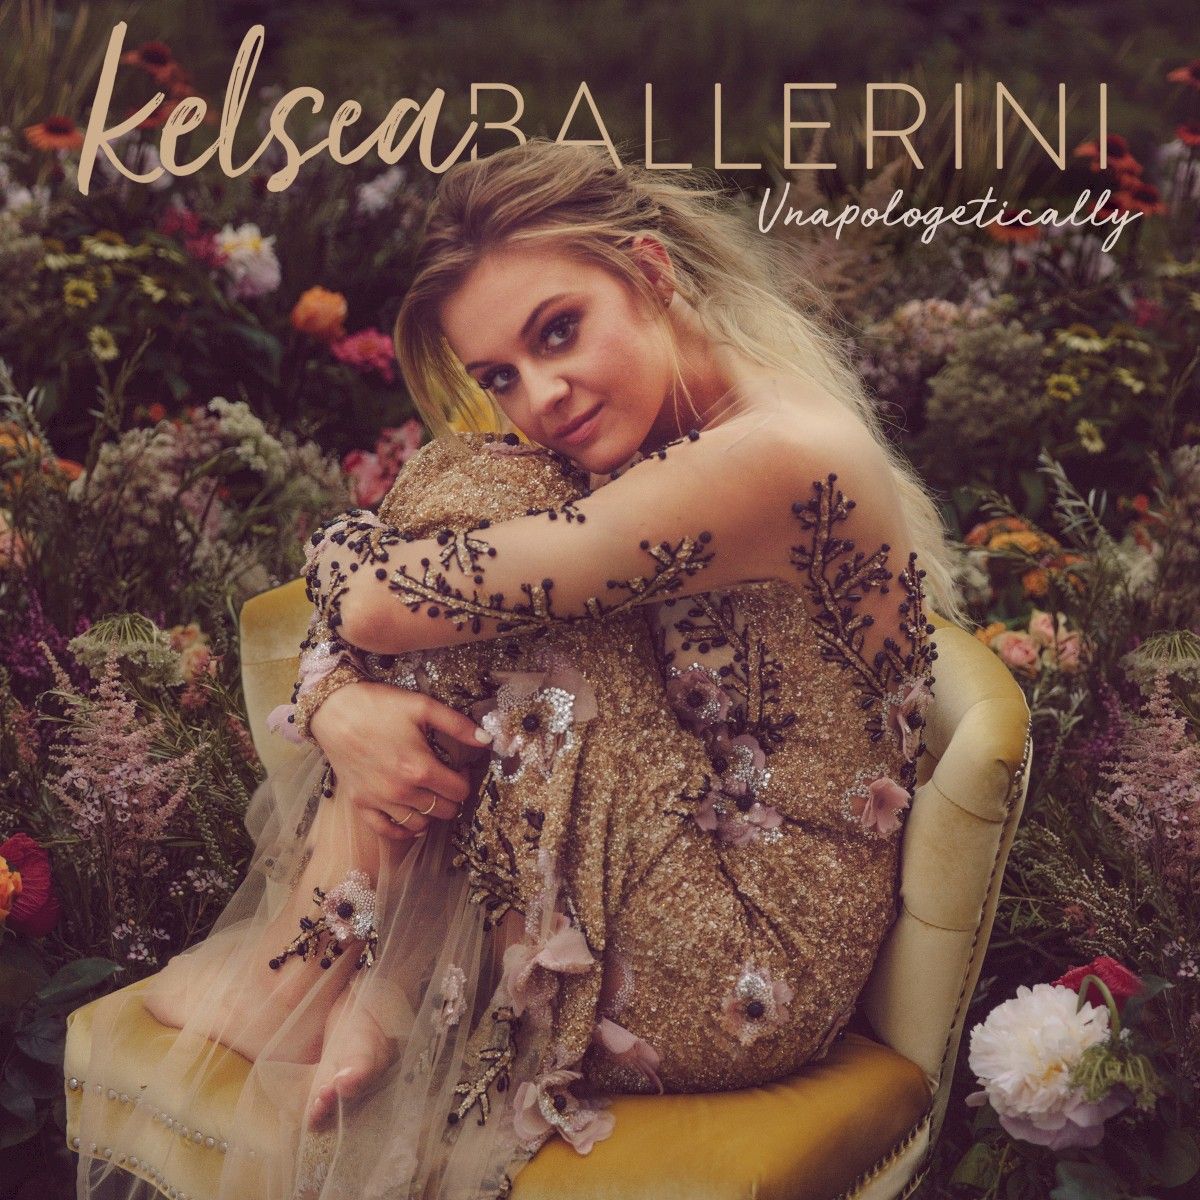 Kelsea Ballerini - Unapologetically Album Cover